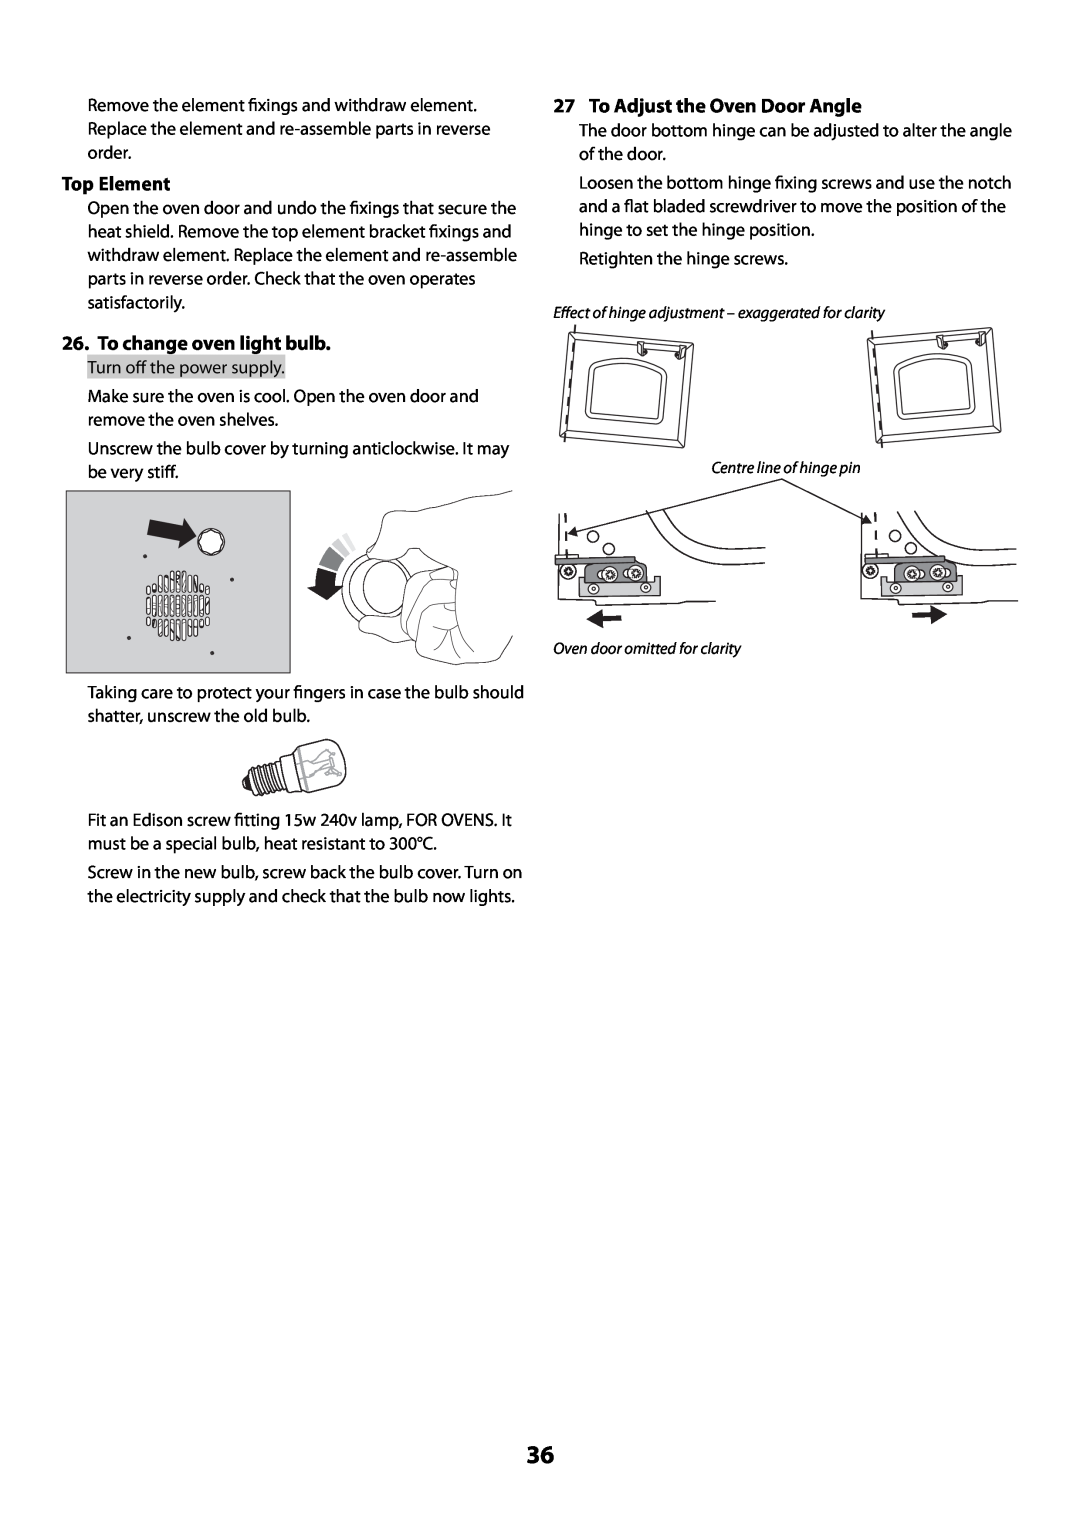 Rangemaster U109300 - 01 manual Top Element, To change oven light bulb, To Adjust the Oven Door Angle 